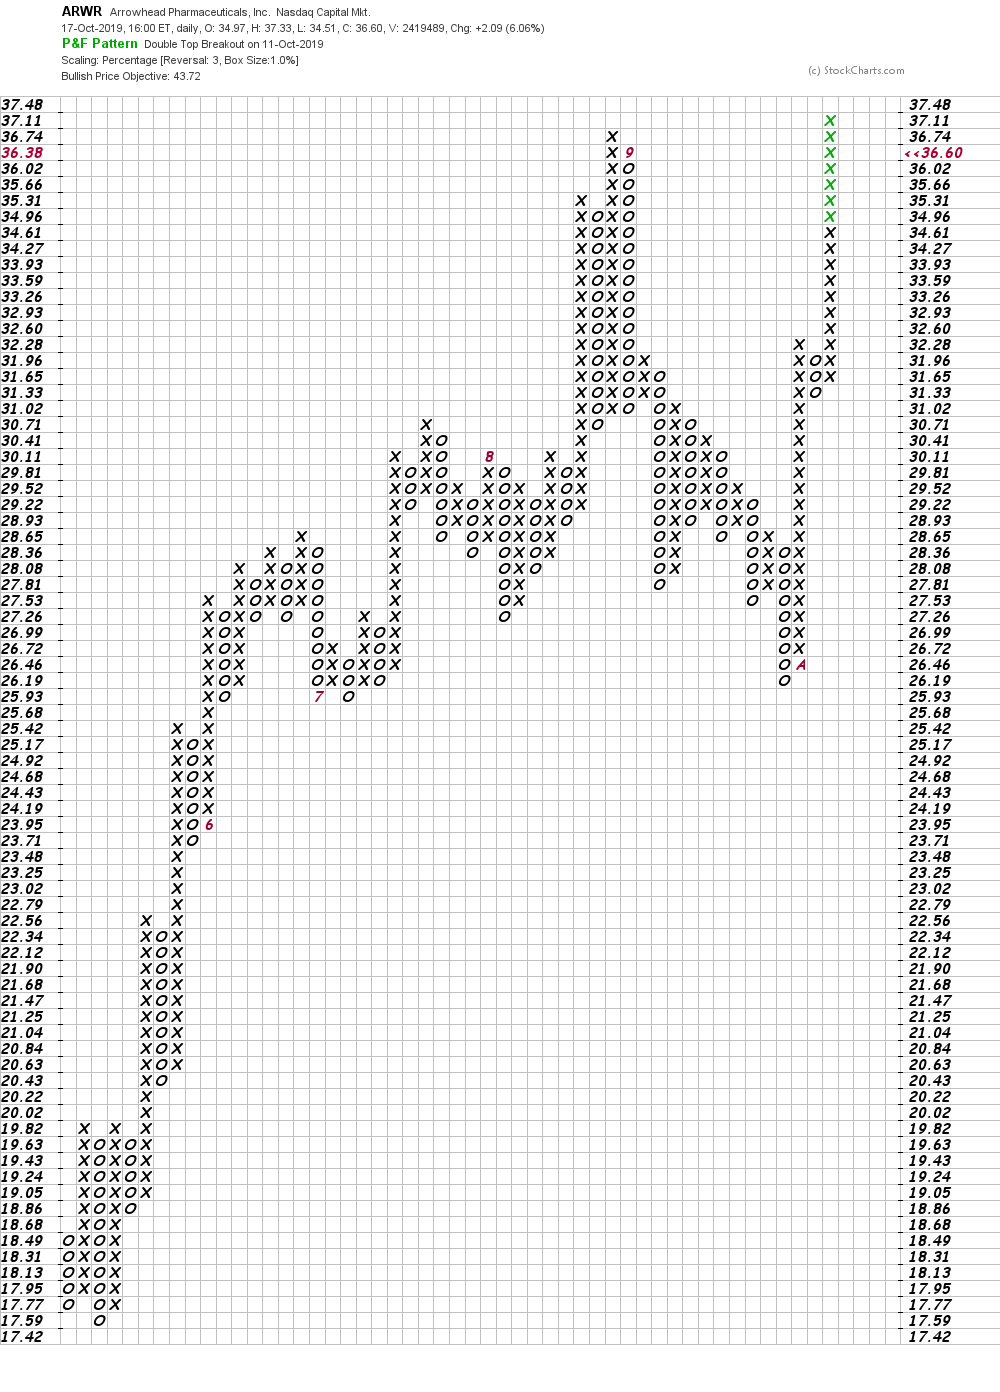 Arwr Stock Chart